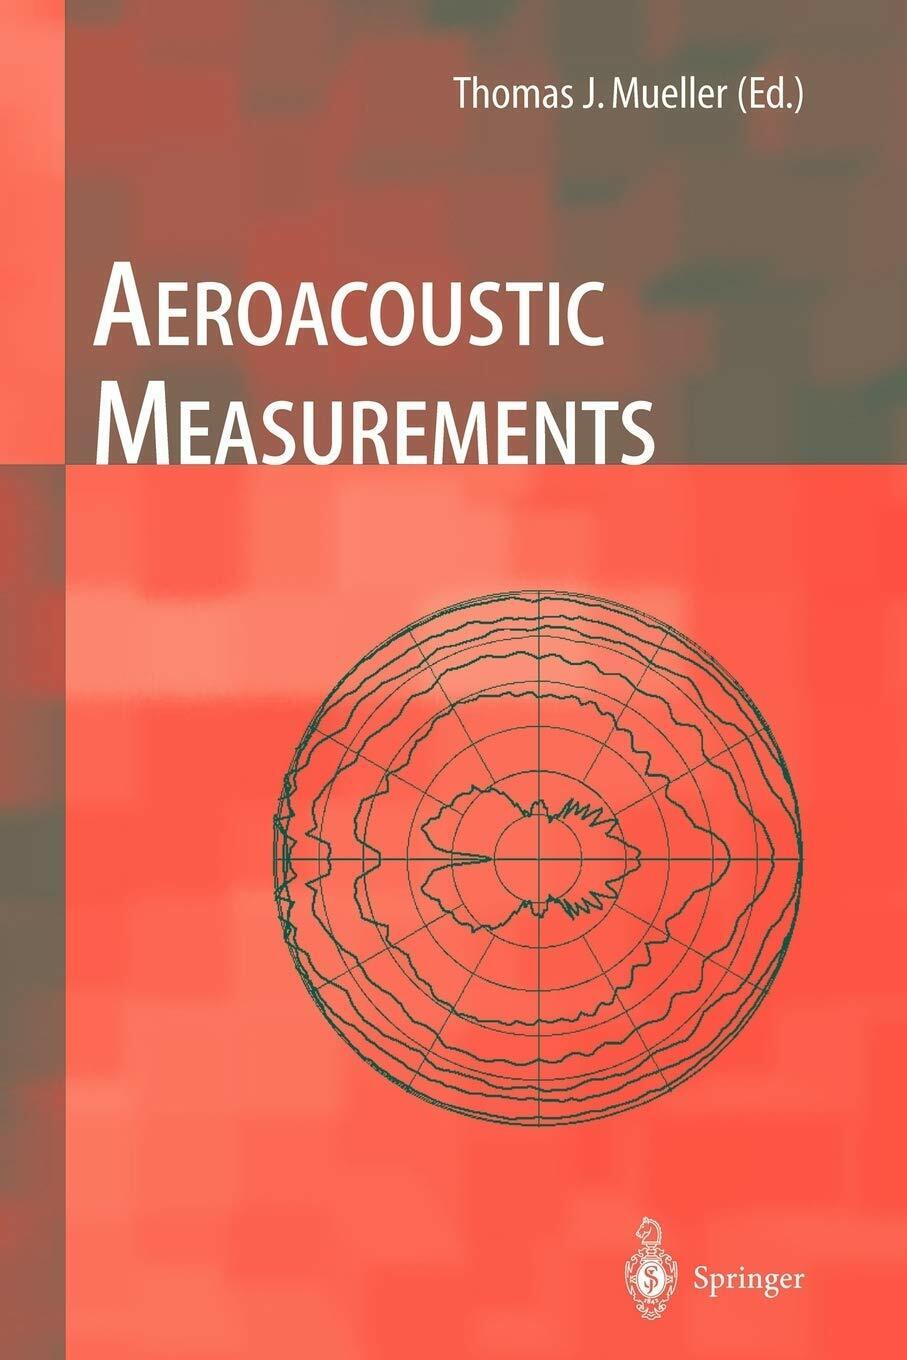 Aeroacoustic Measurements - Thomas J. Mueller  - Springer, 2010